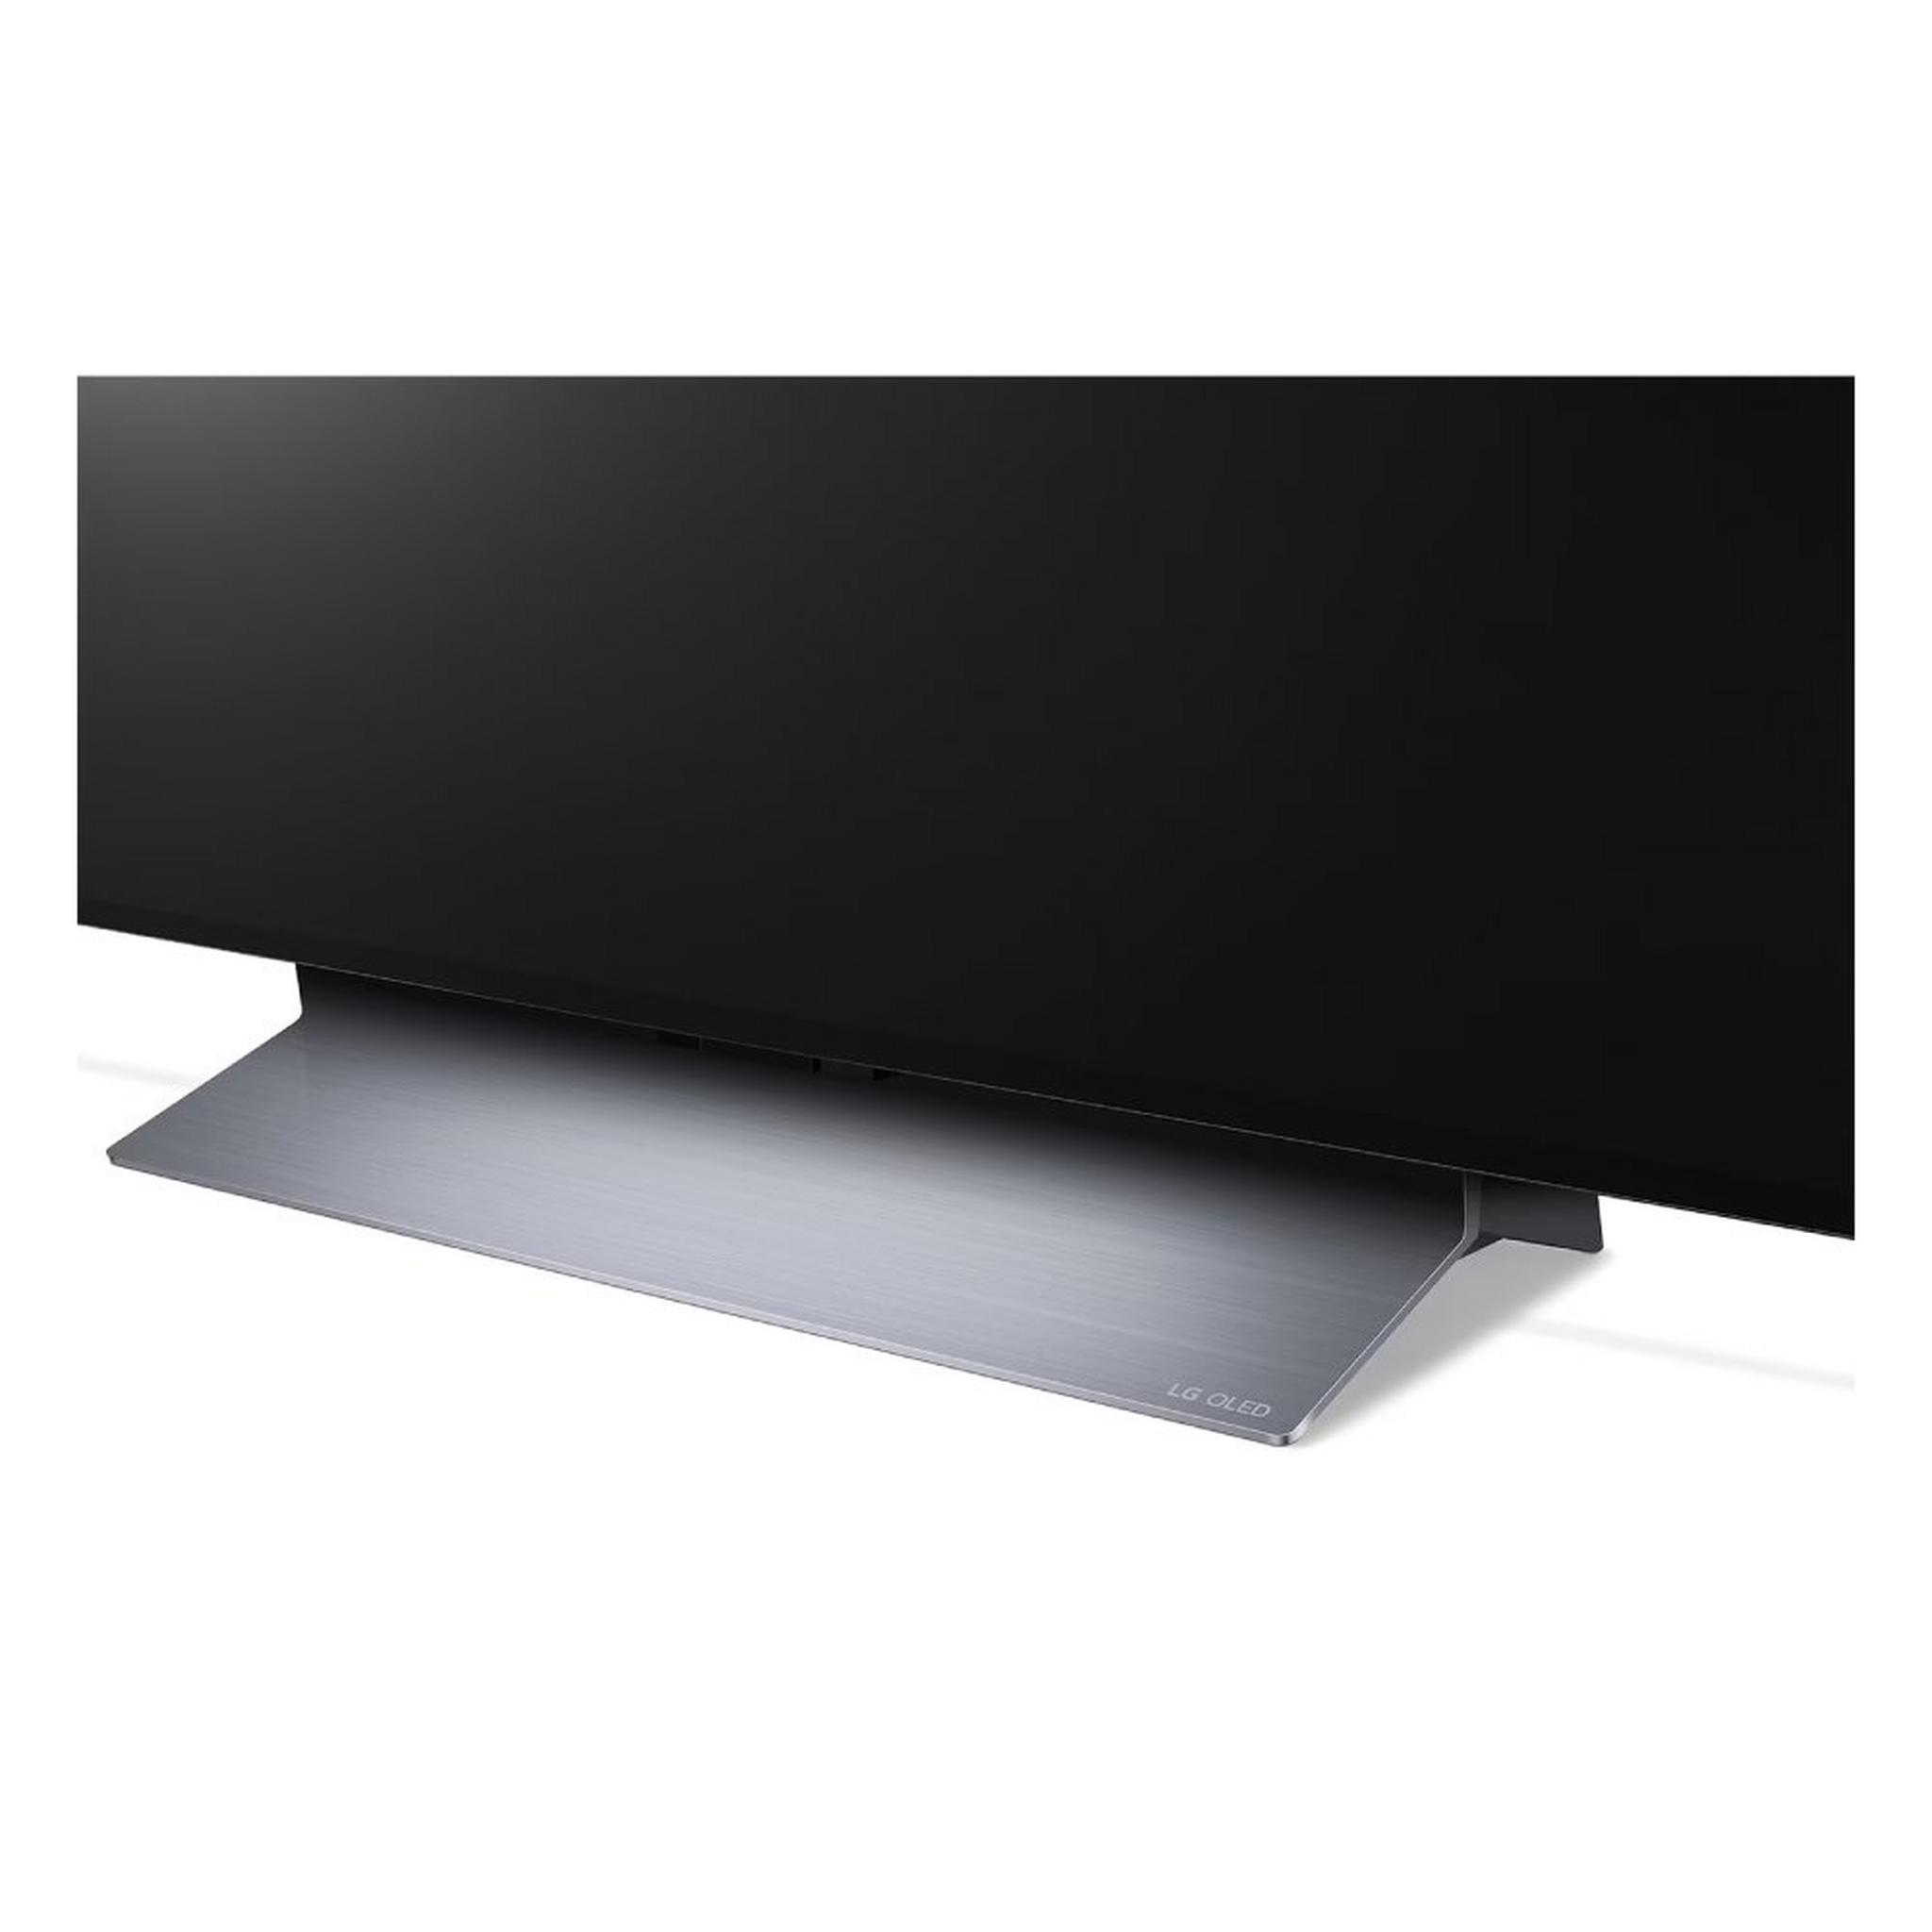 LG Smart TV evo OLED 83 Inch 4K 120Hz (OLED83C2)